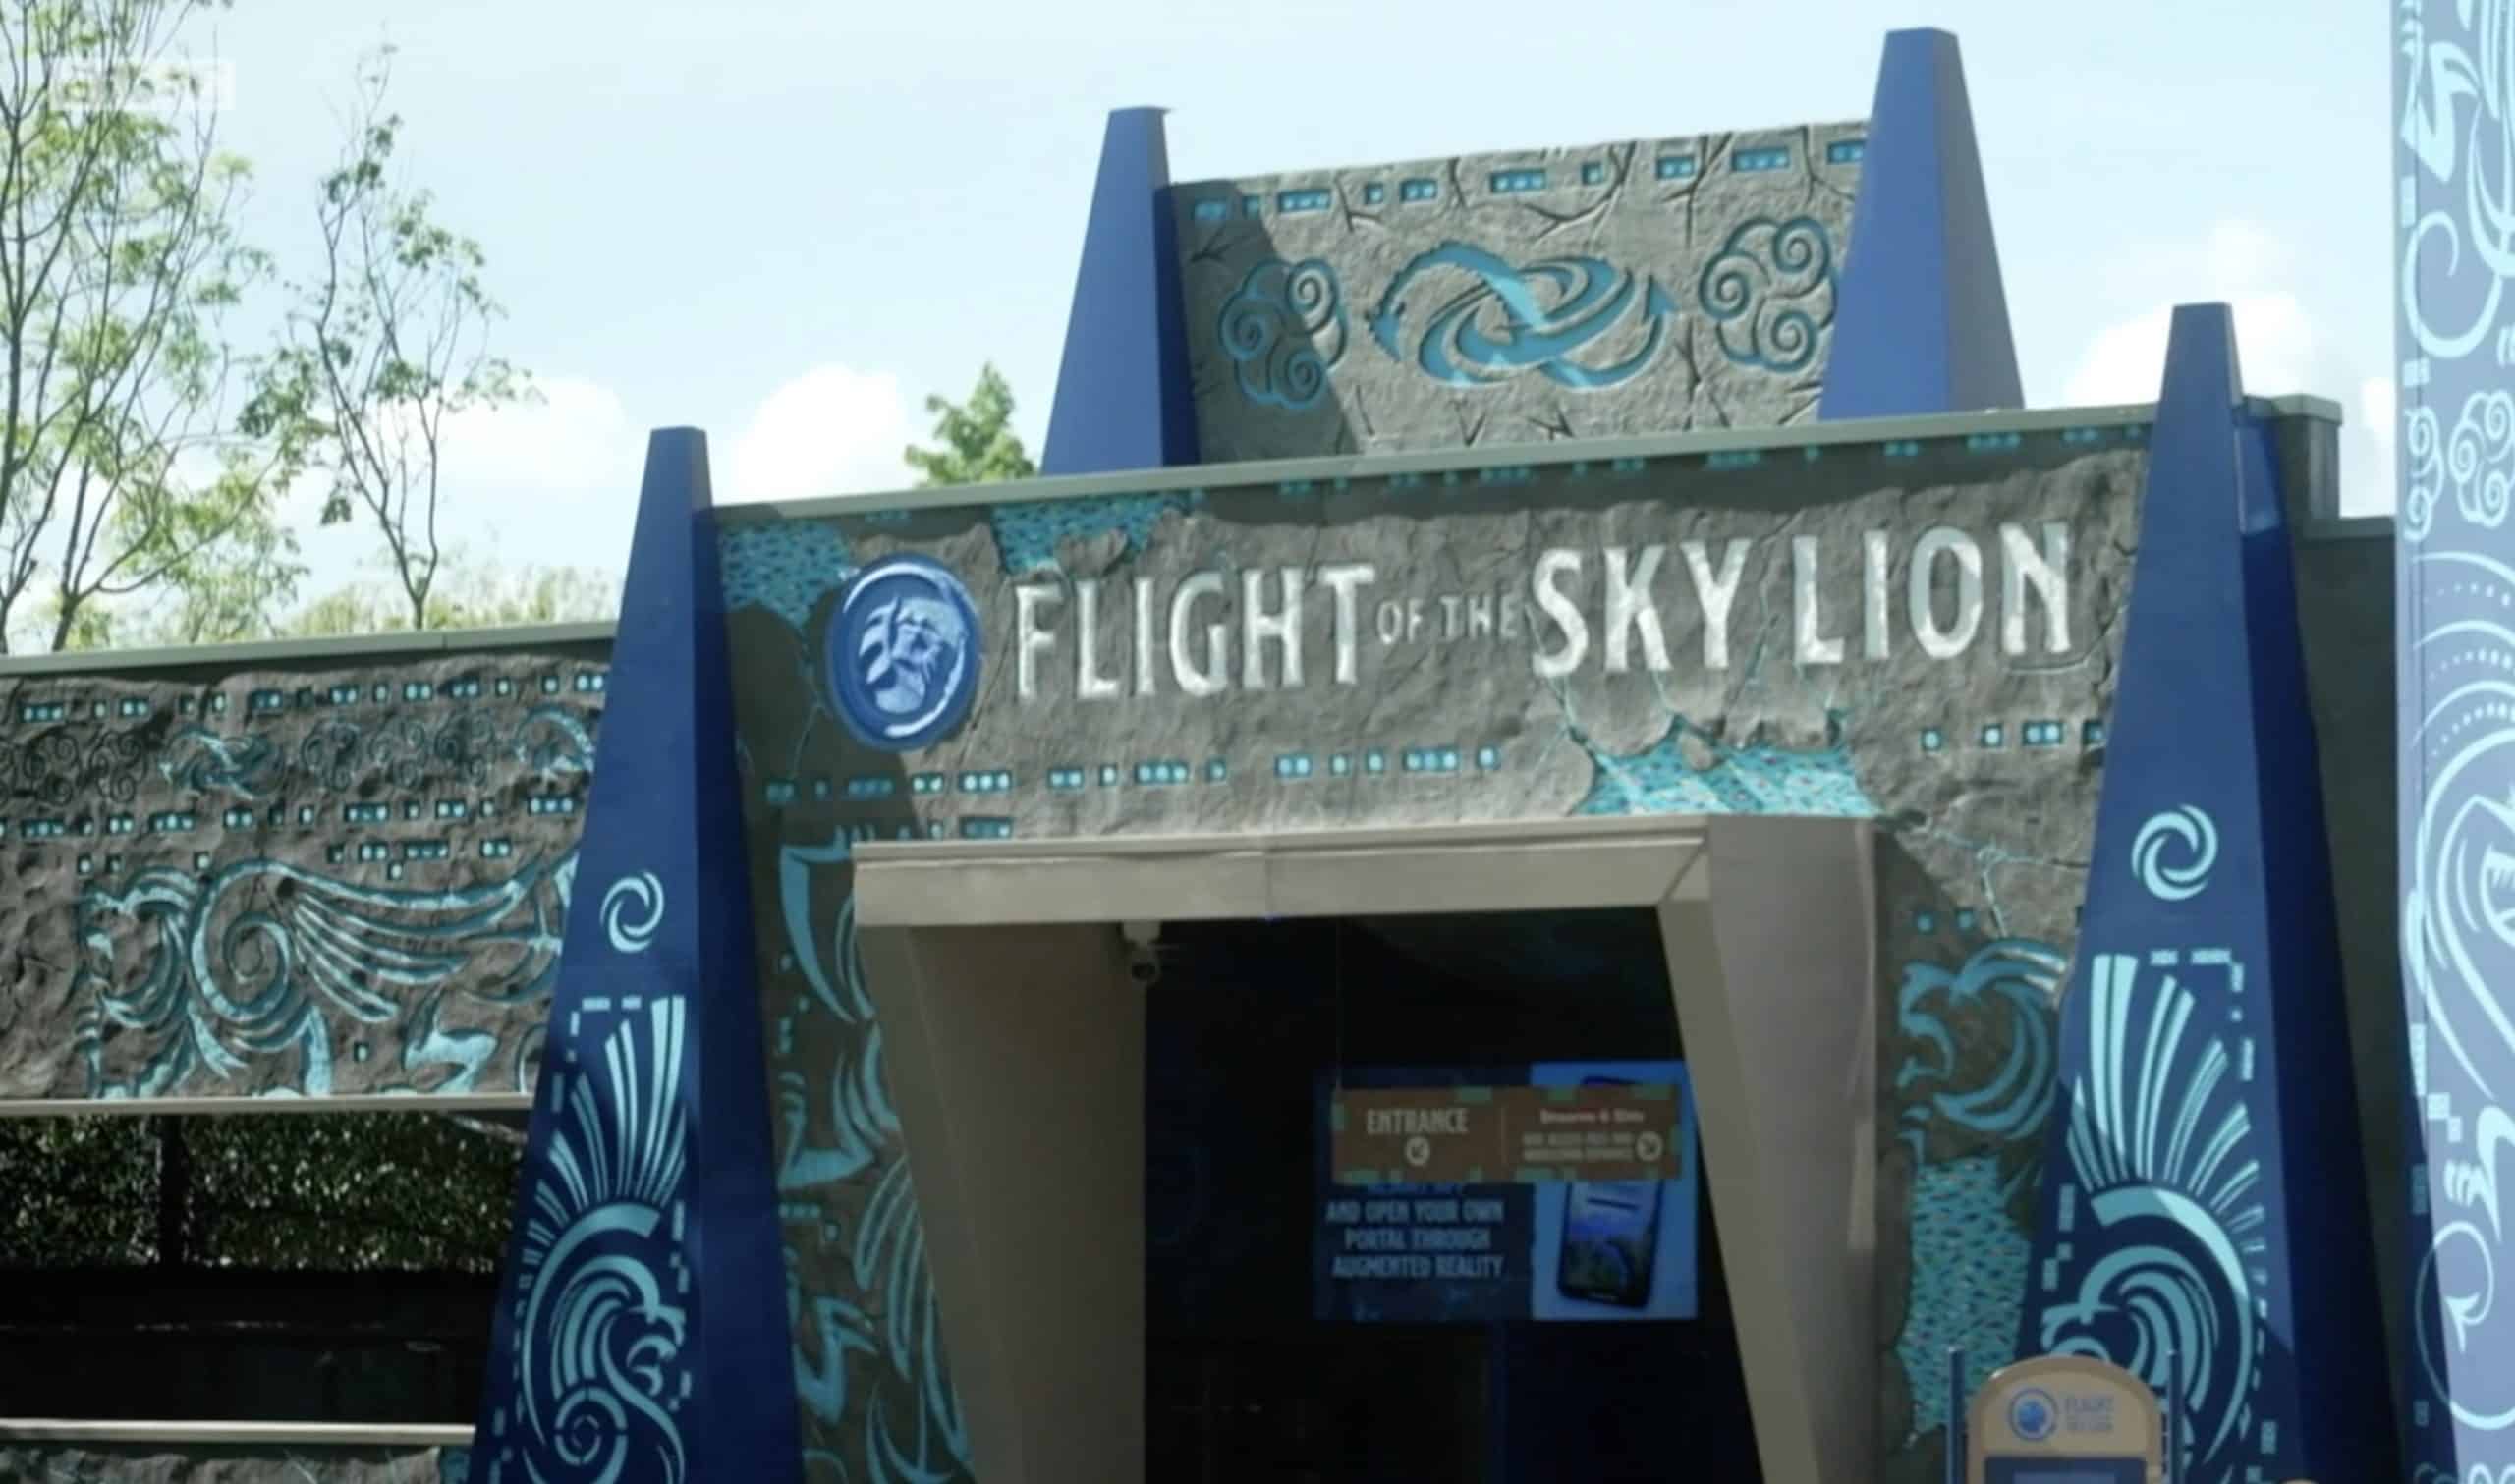 Flight the Sky Lion at Lego Land Winsor